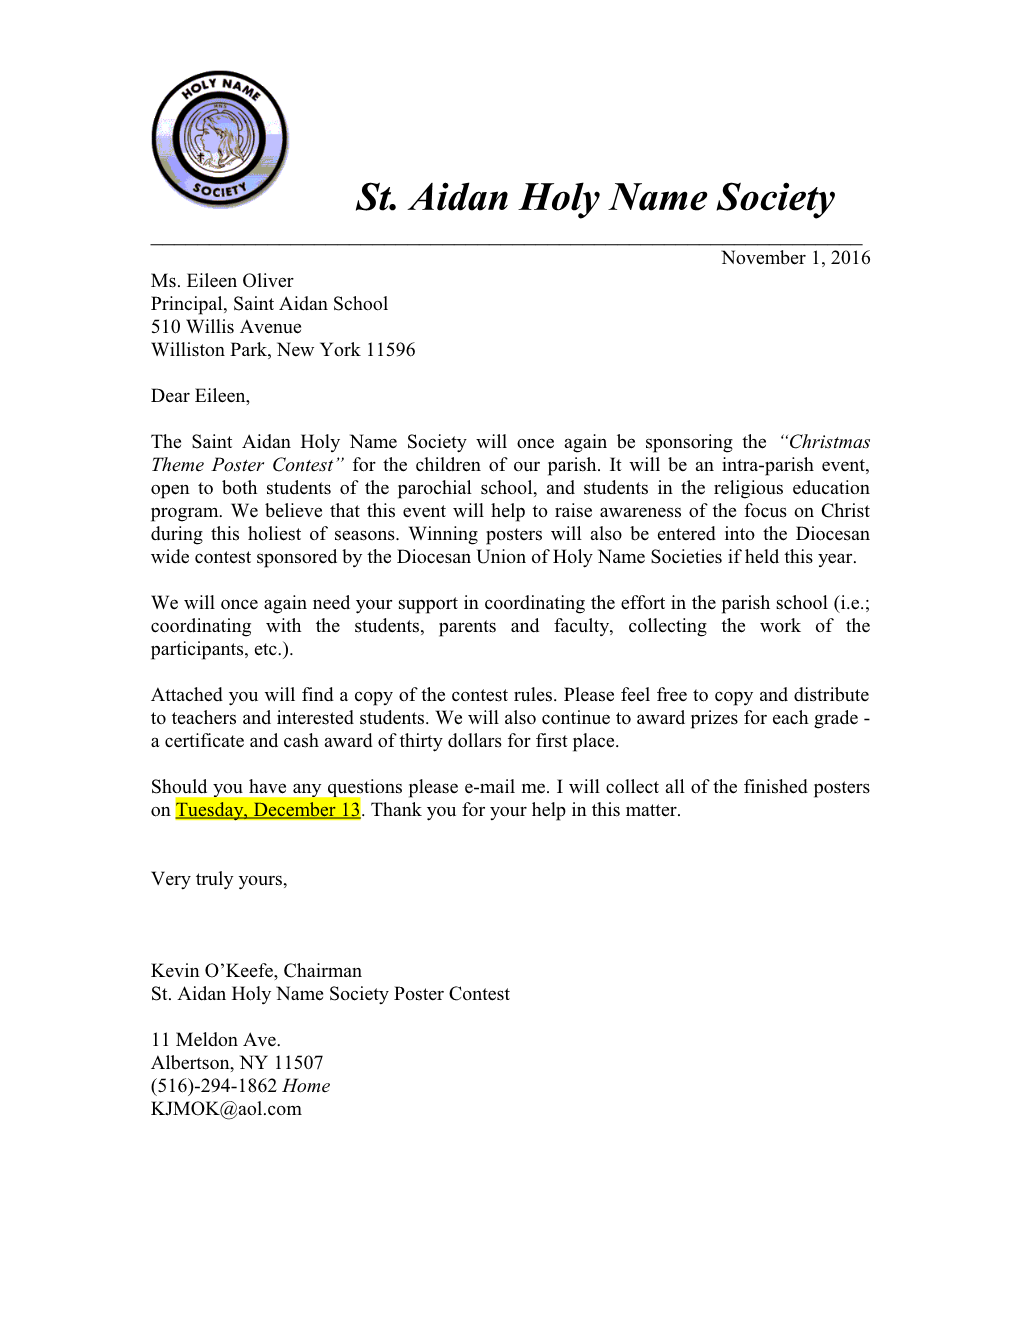 Saint Aidan S Holy Name Society